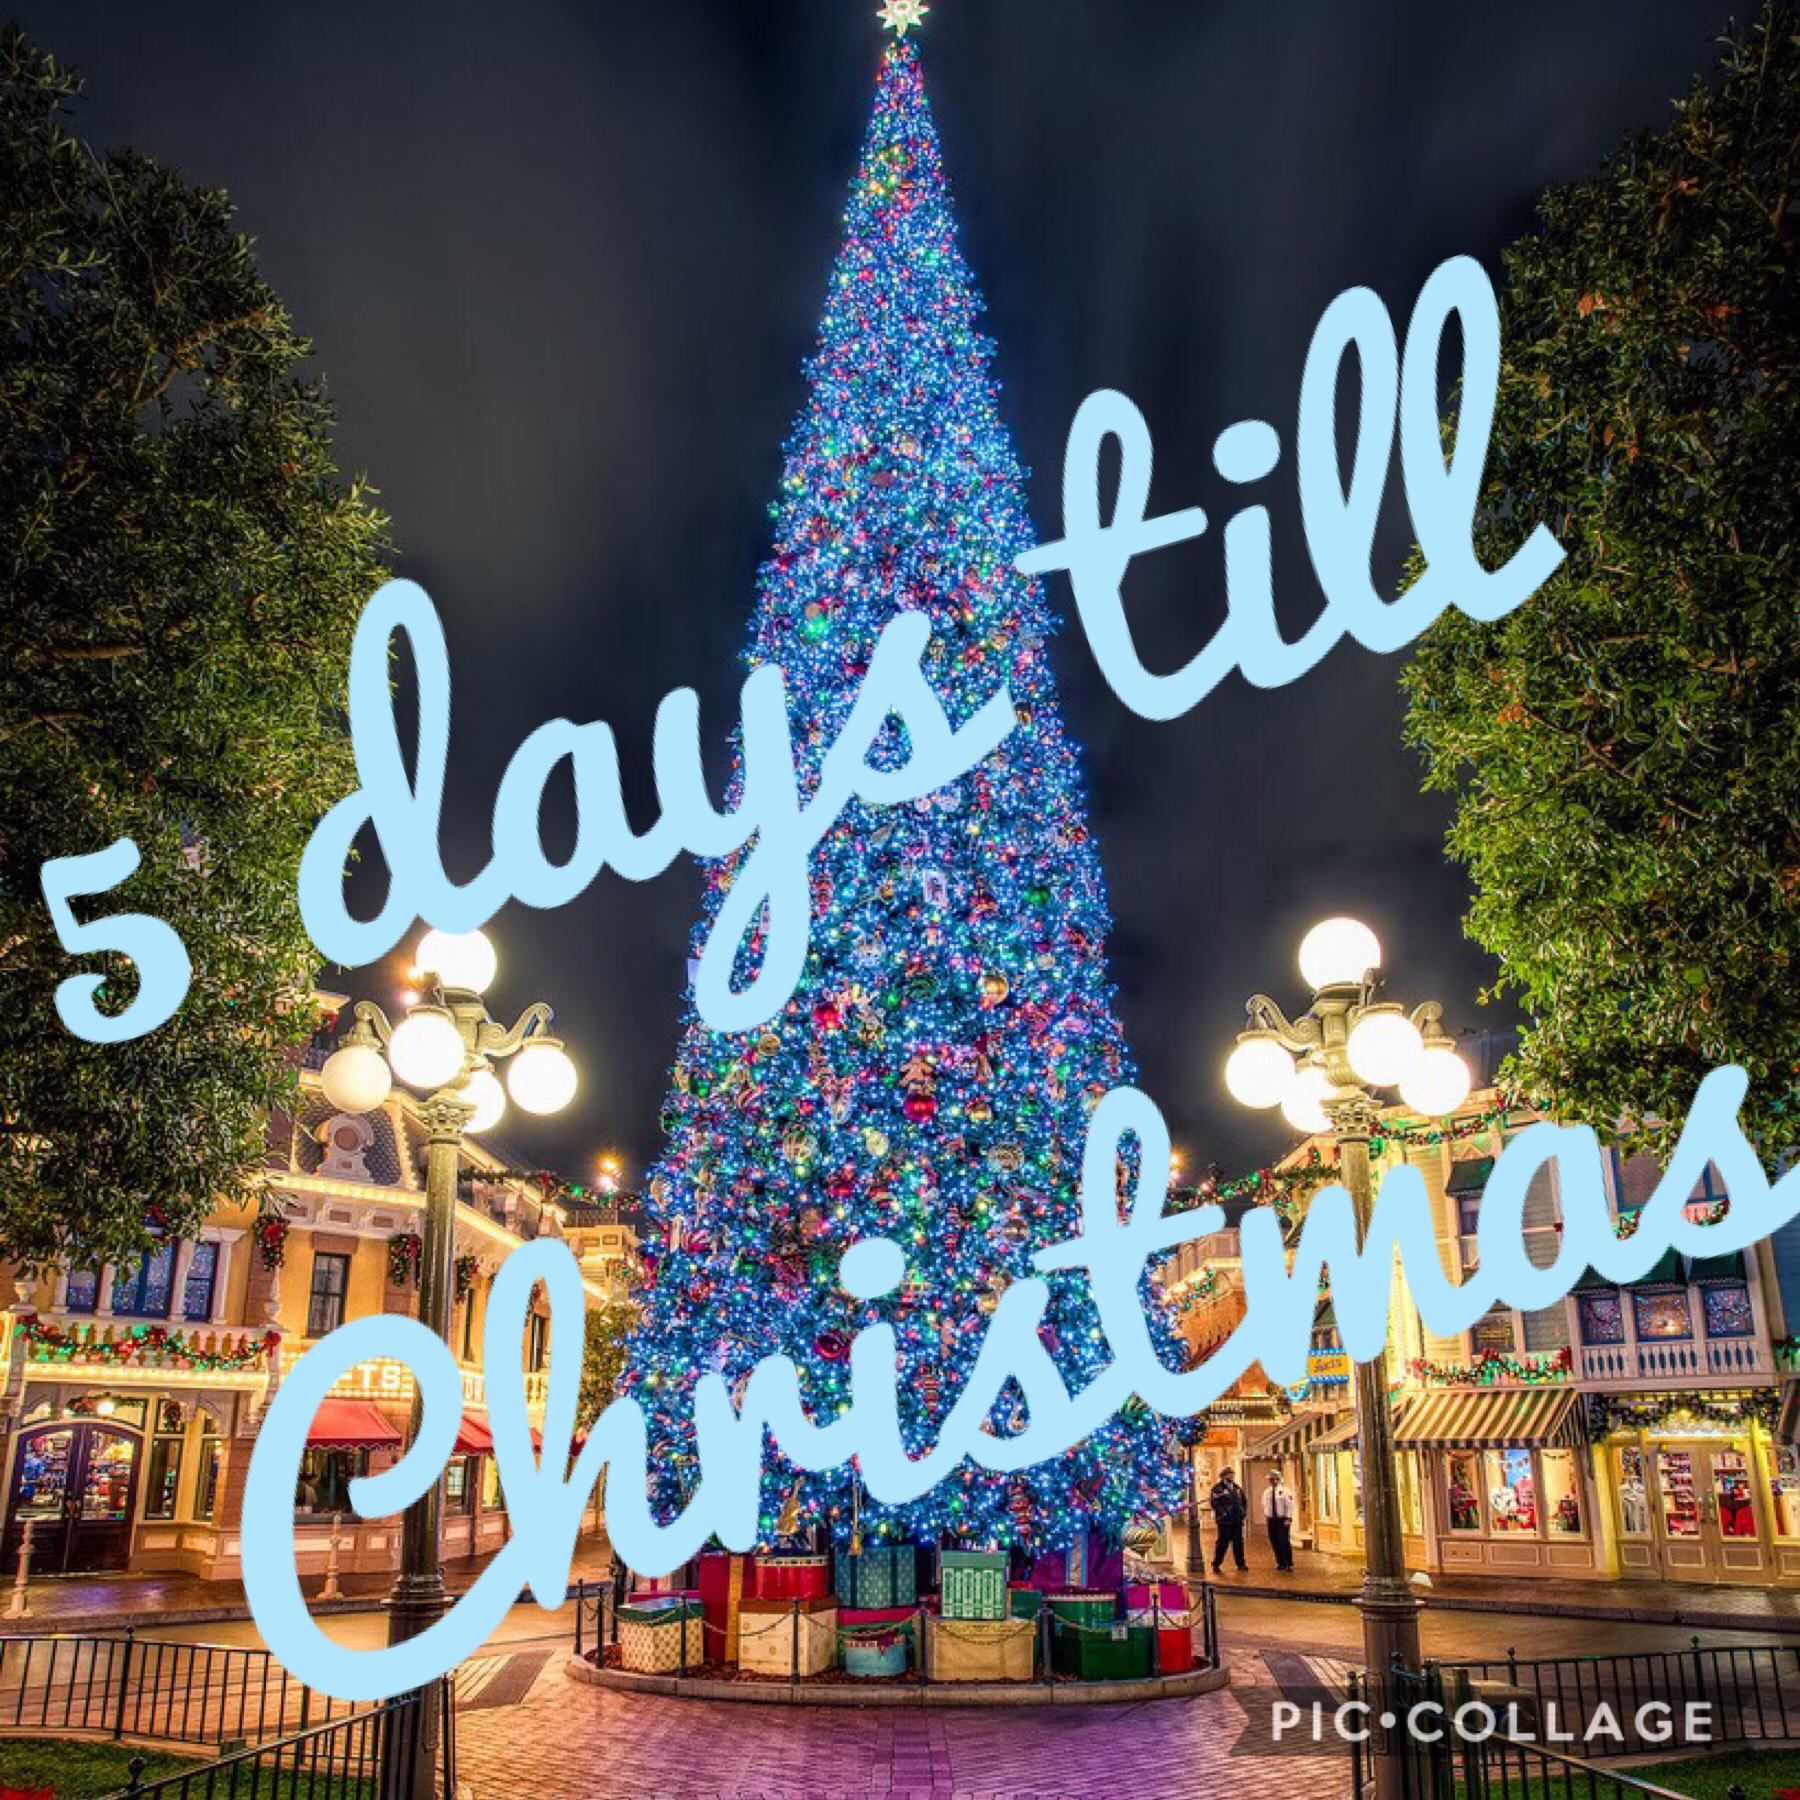 5 days till Christmas and 4 days till Christmas eve